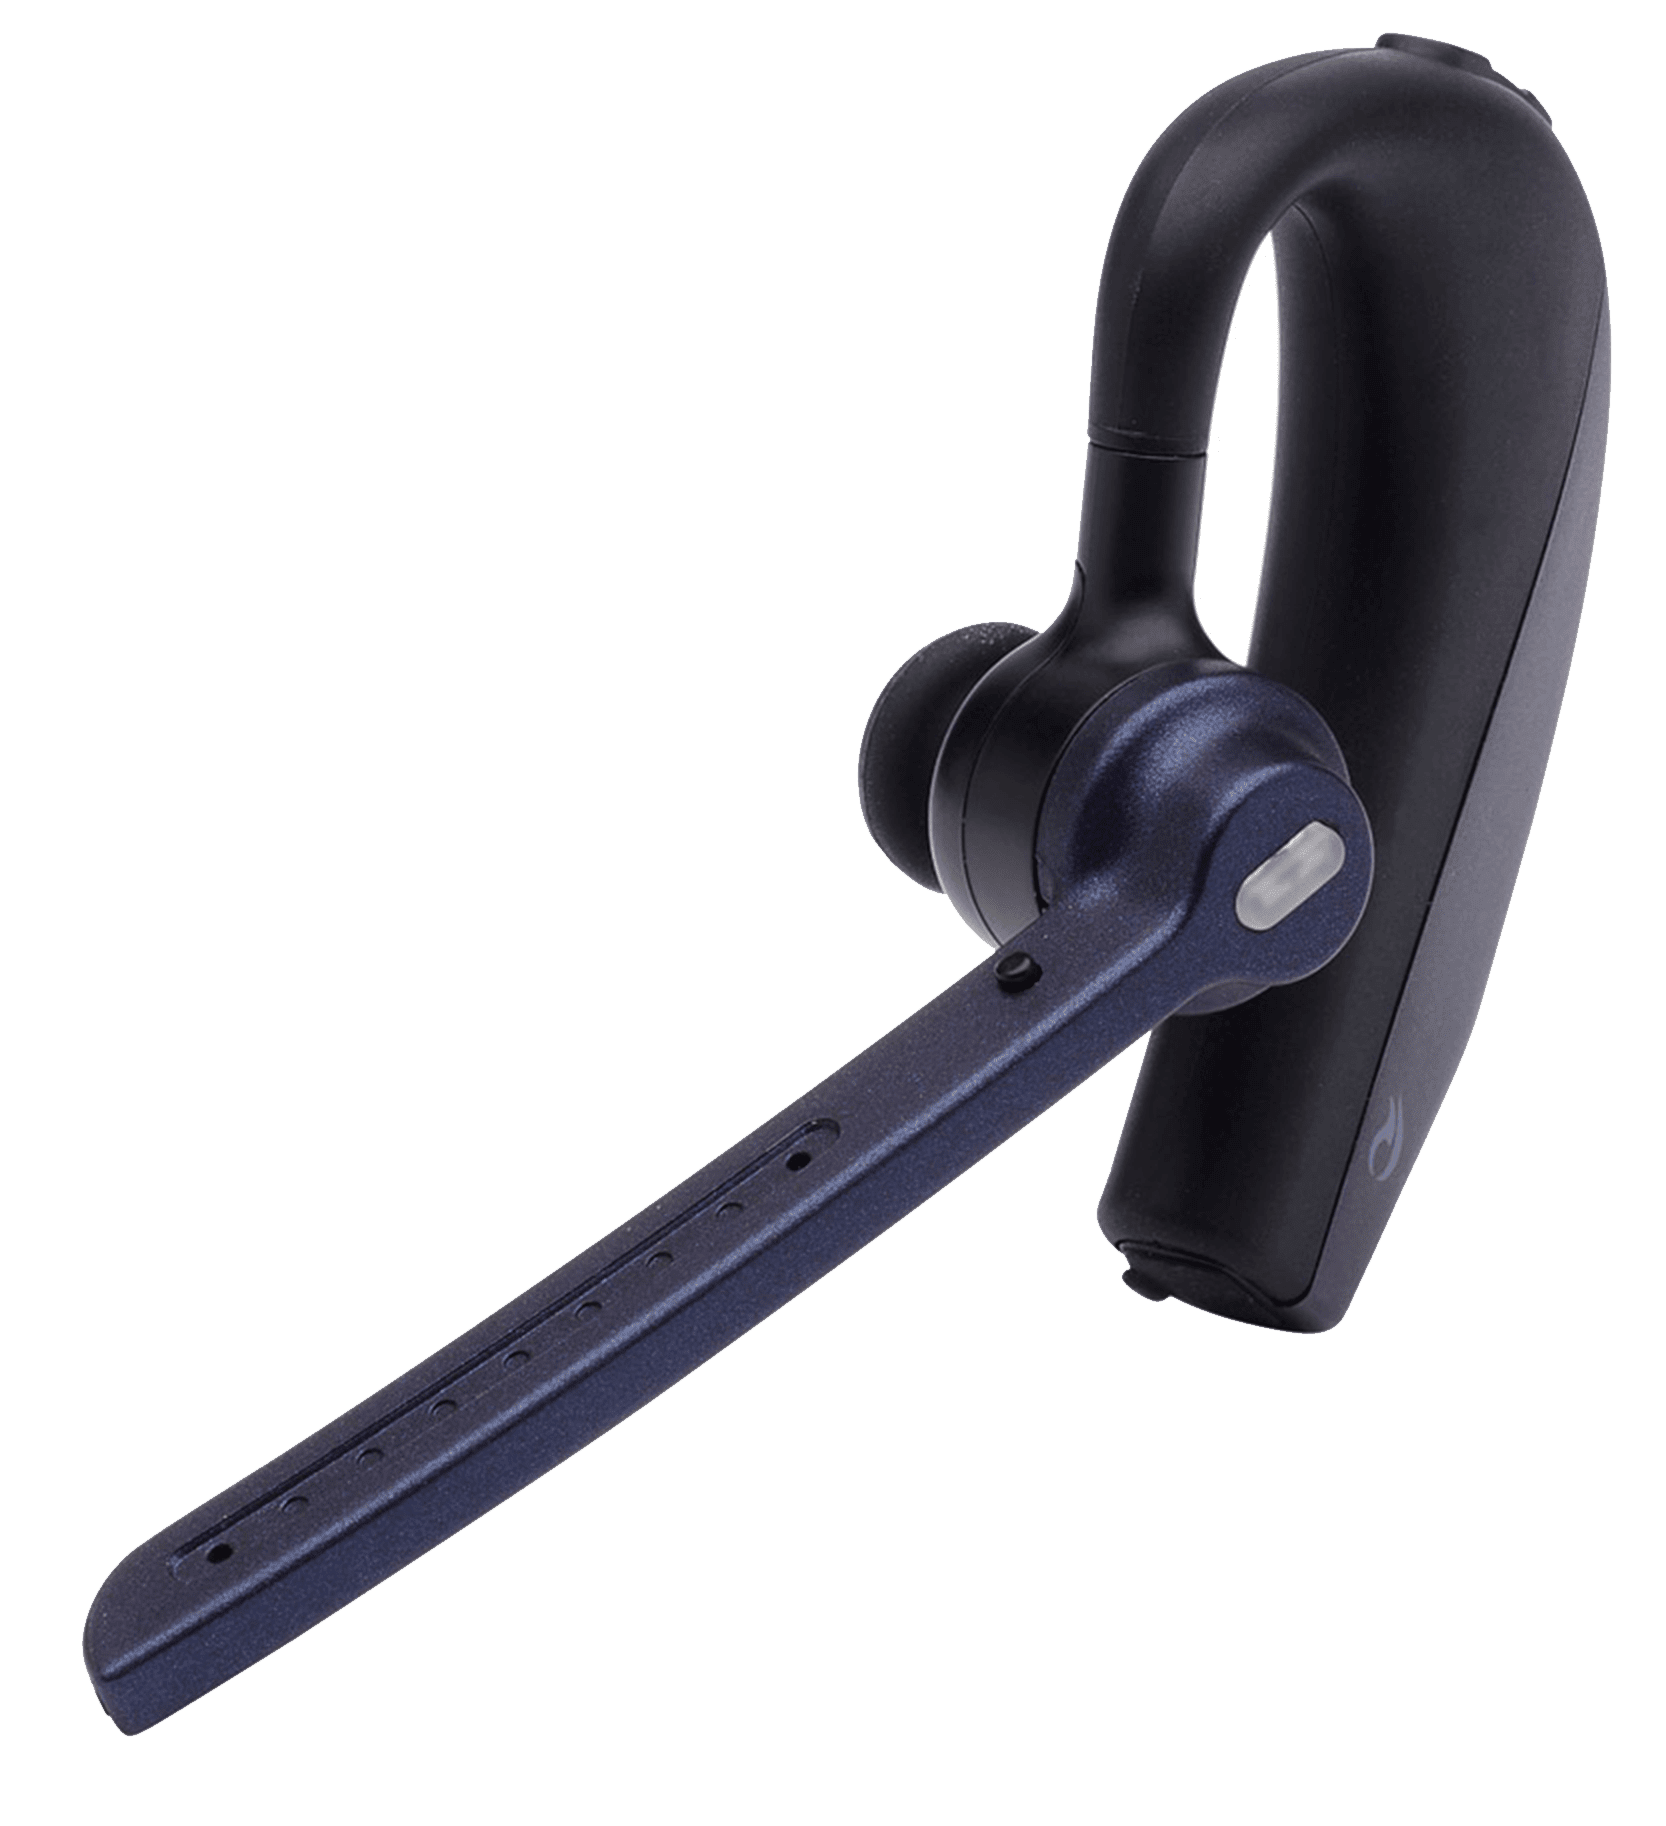 Nuance Dragon Bluetooth Wireless Headset-II